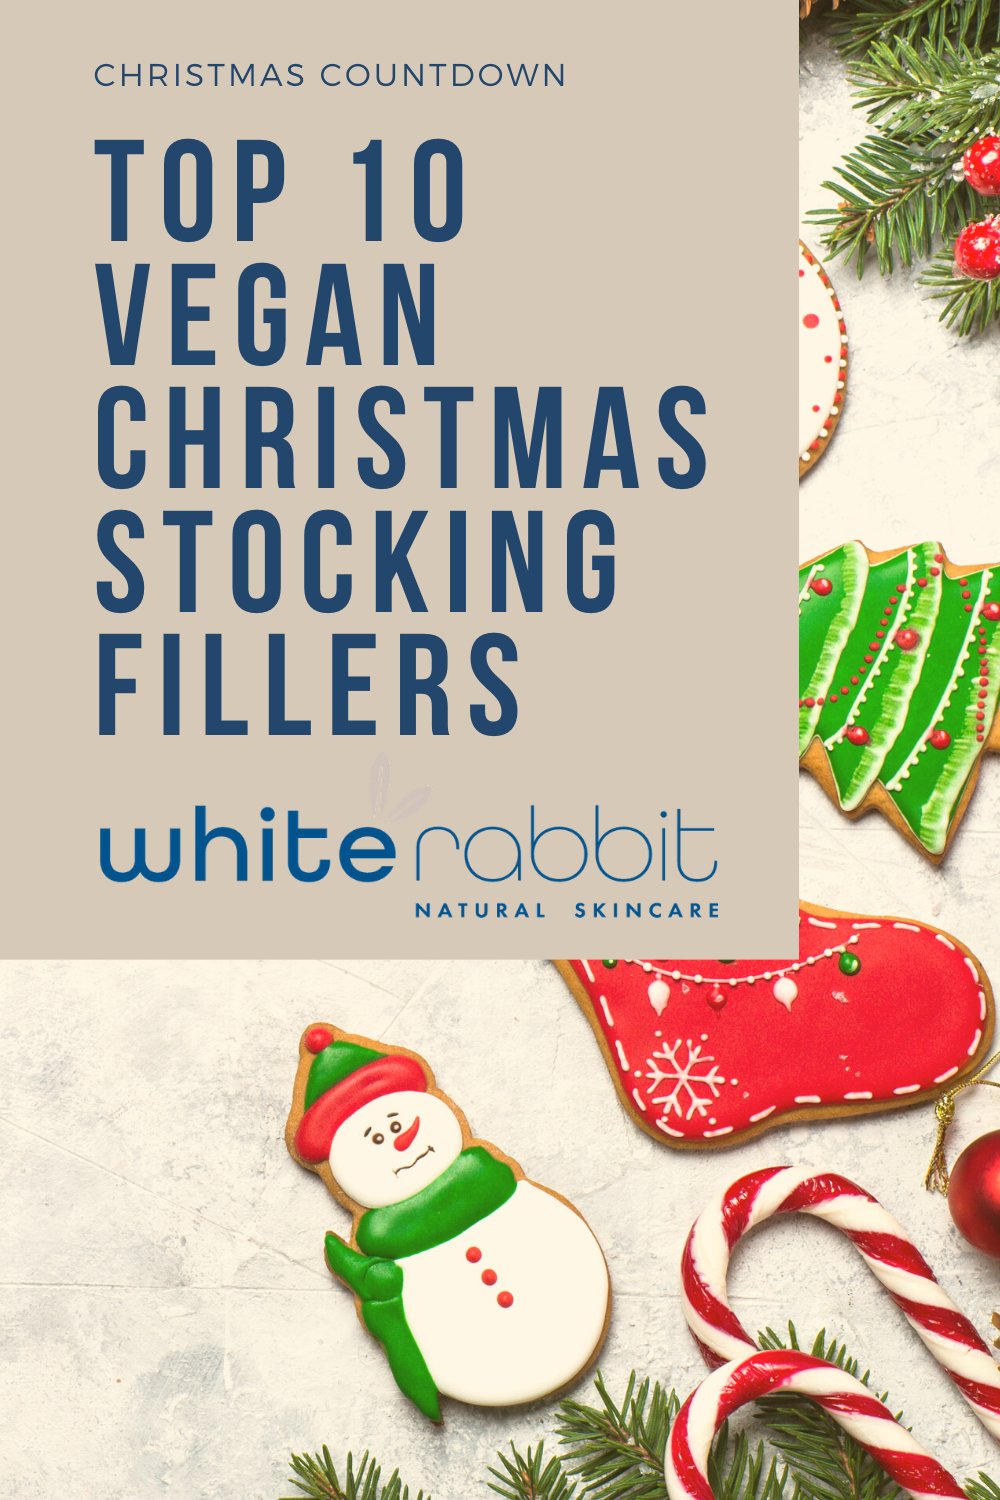 Top 10 Vegan Christmas stocking fillers - White Rabbit Skin Care